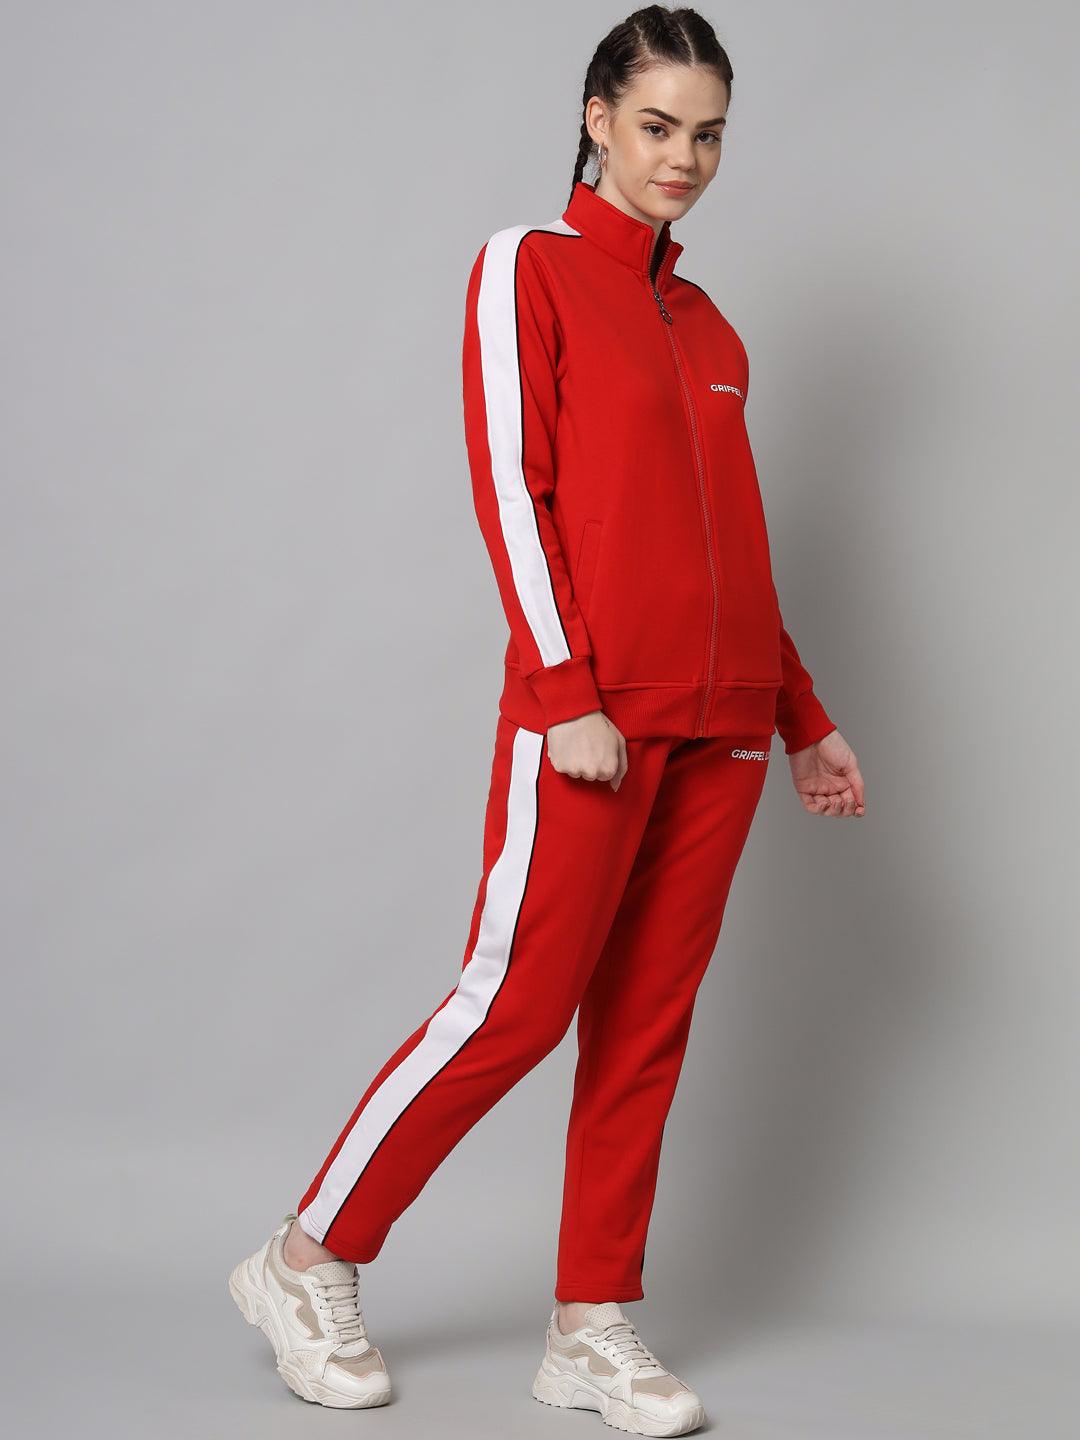 Griffel Women Color Blocked Fleece Zipper Neck Sweatshirt and Joggers Full set RedTracksuit - griffel